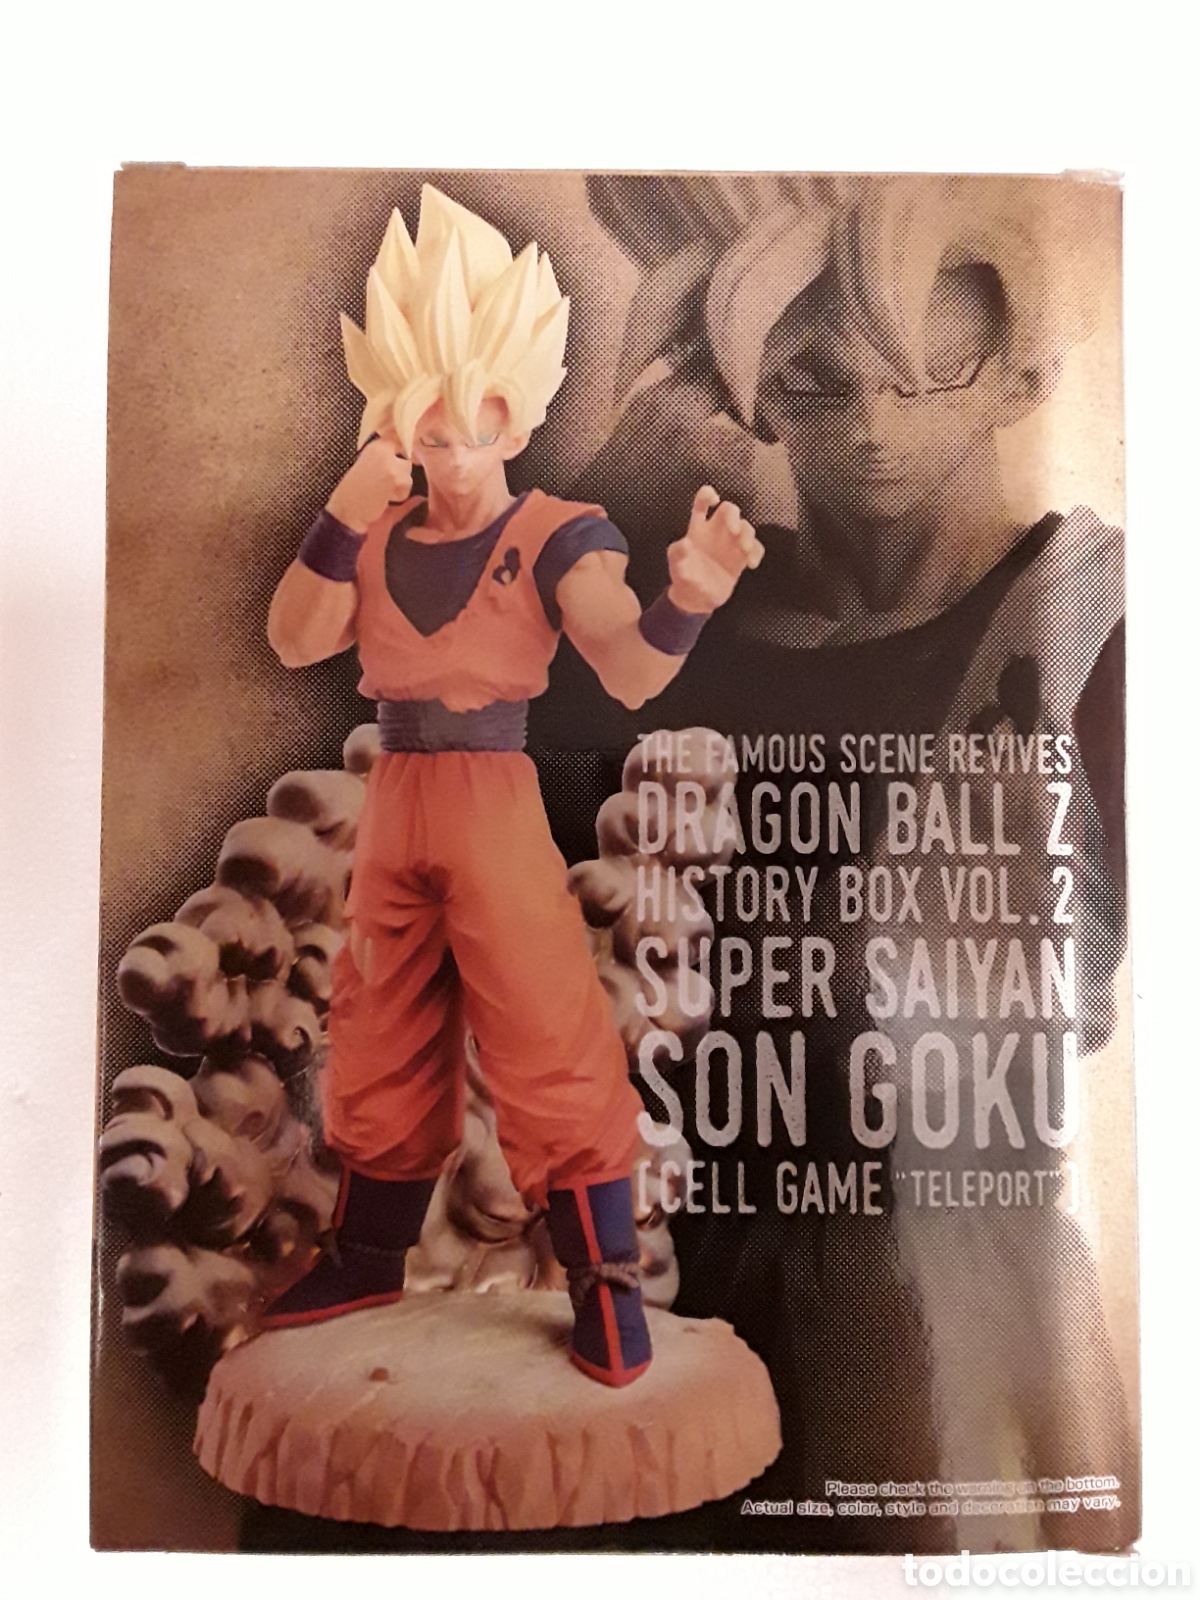 27cm Dragon Ball Super Figures Zamasu False Face Son Goku Action Figure PVC  Collection Anime Super Saiyan ROSE Goku Model Toys - AliExpress